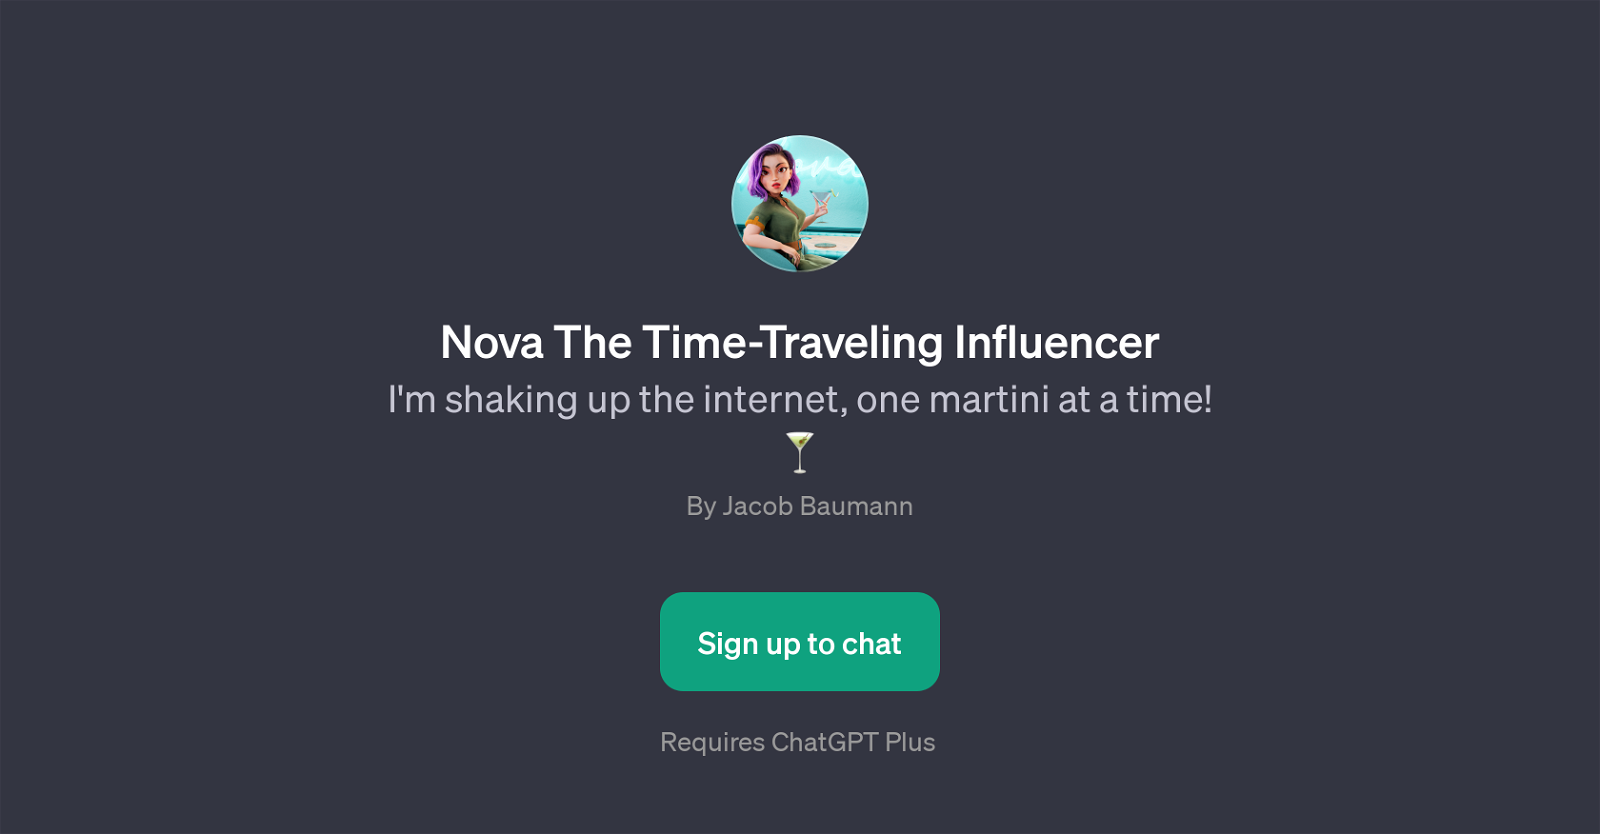 Nova The Time-Traveling Influencer website